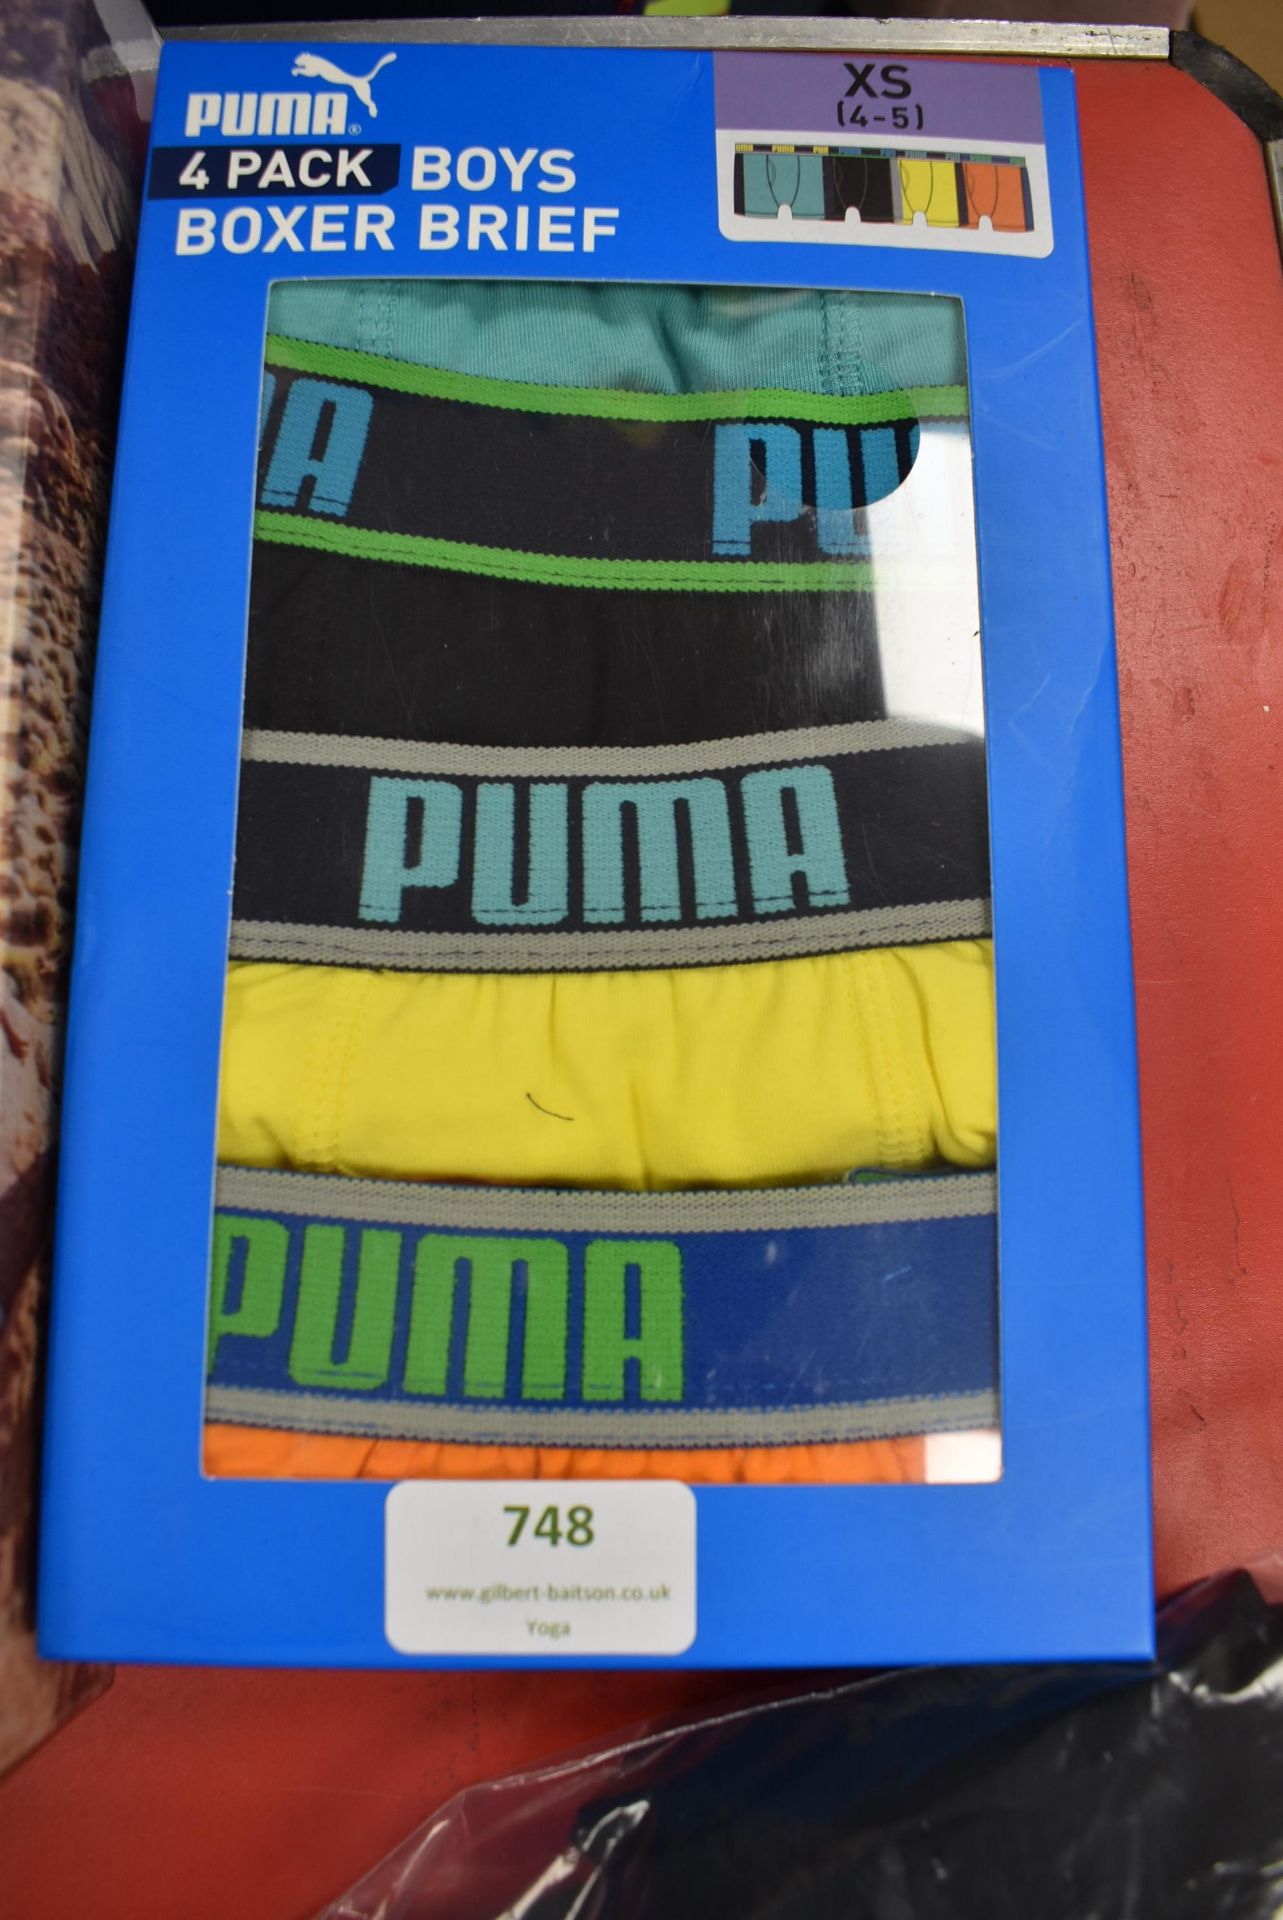 Puma Boy’s Boxer Briefs Size: 4-5 years 4pk